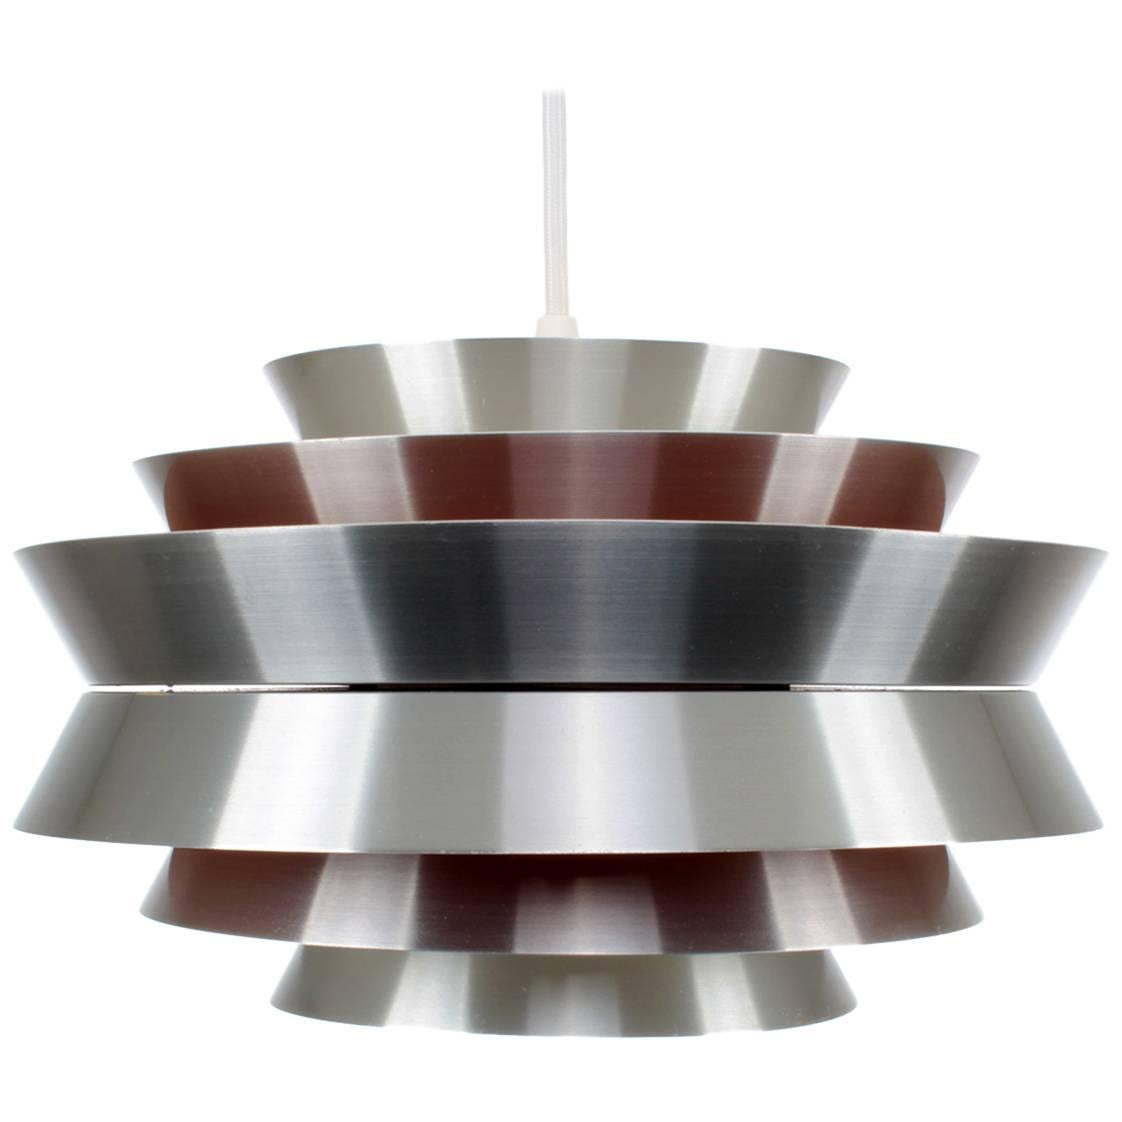 Trava Pendant, Iconic Swedish Lighting Design by Carl Thore for Granhaga, 1967